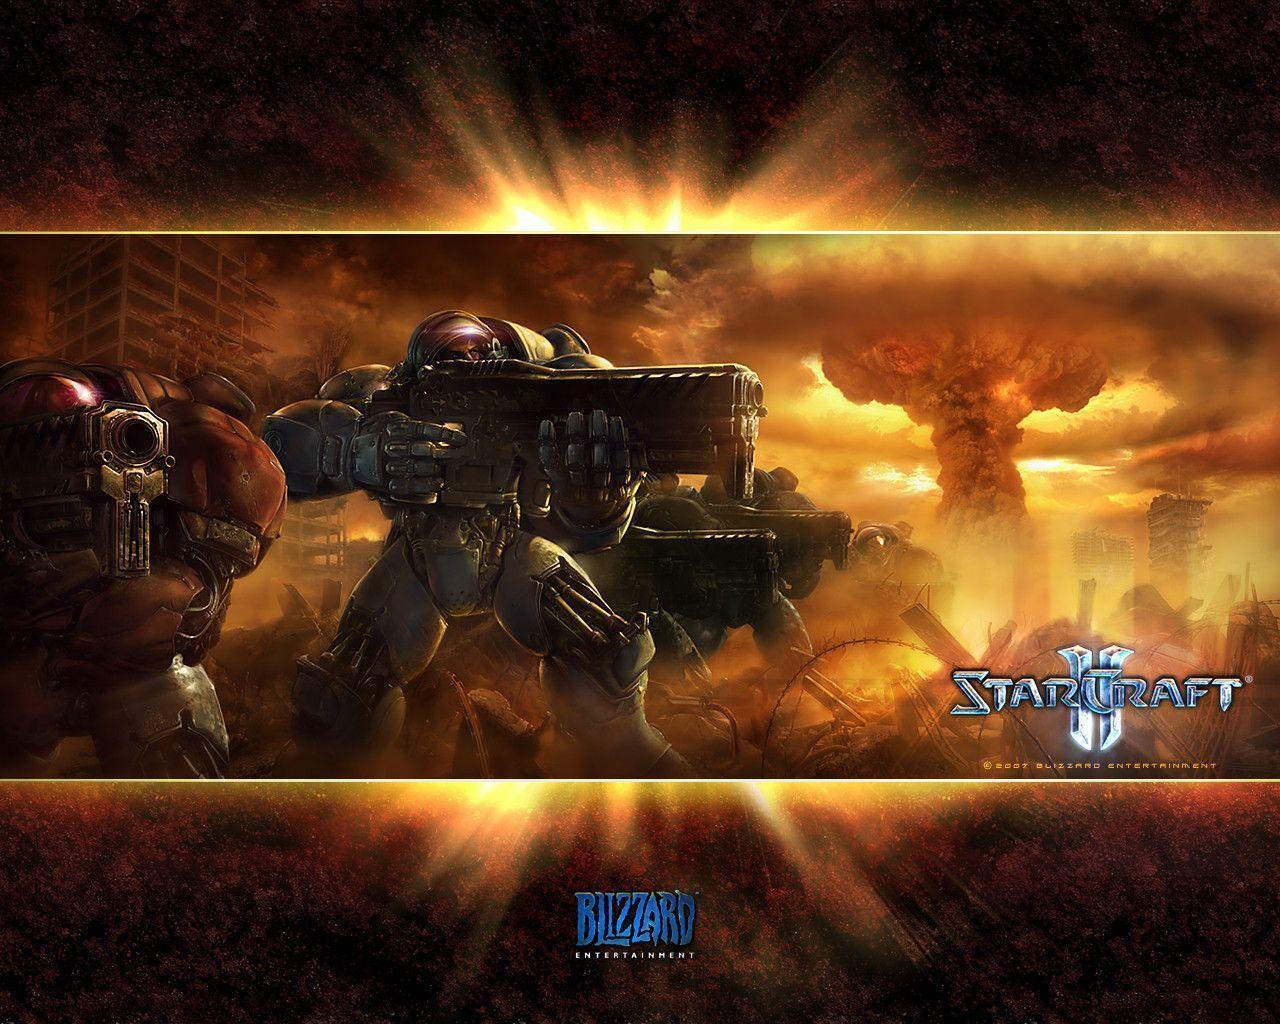 Starcraft Wallpaper 252142 Image HD Wallpaper. Wallfoy.com